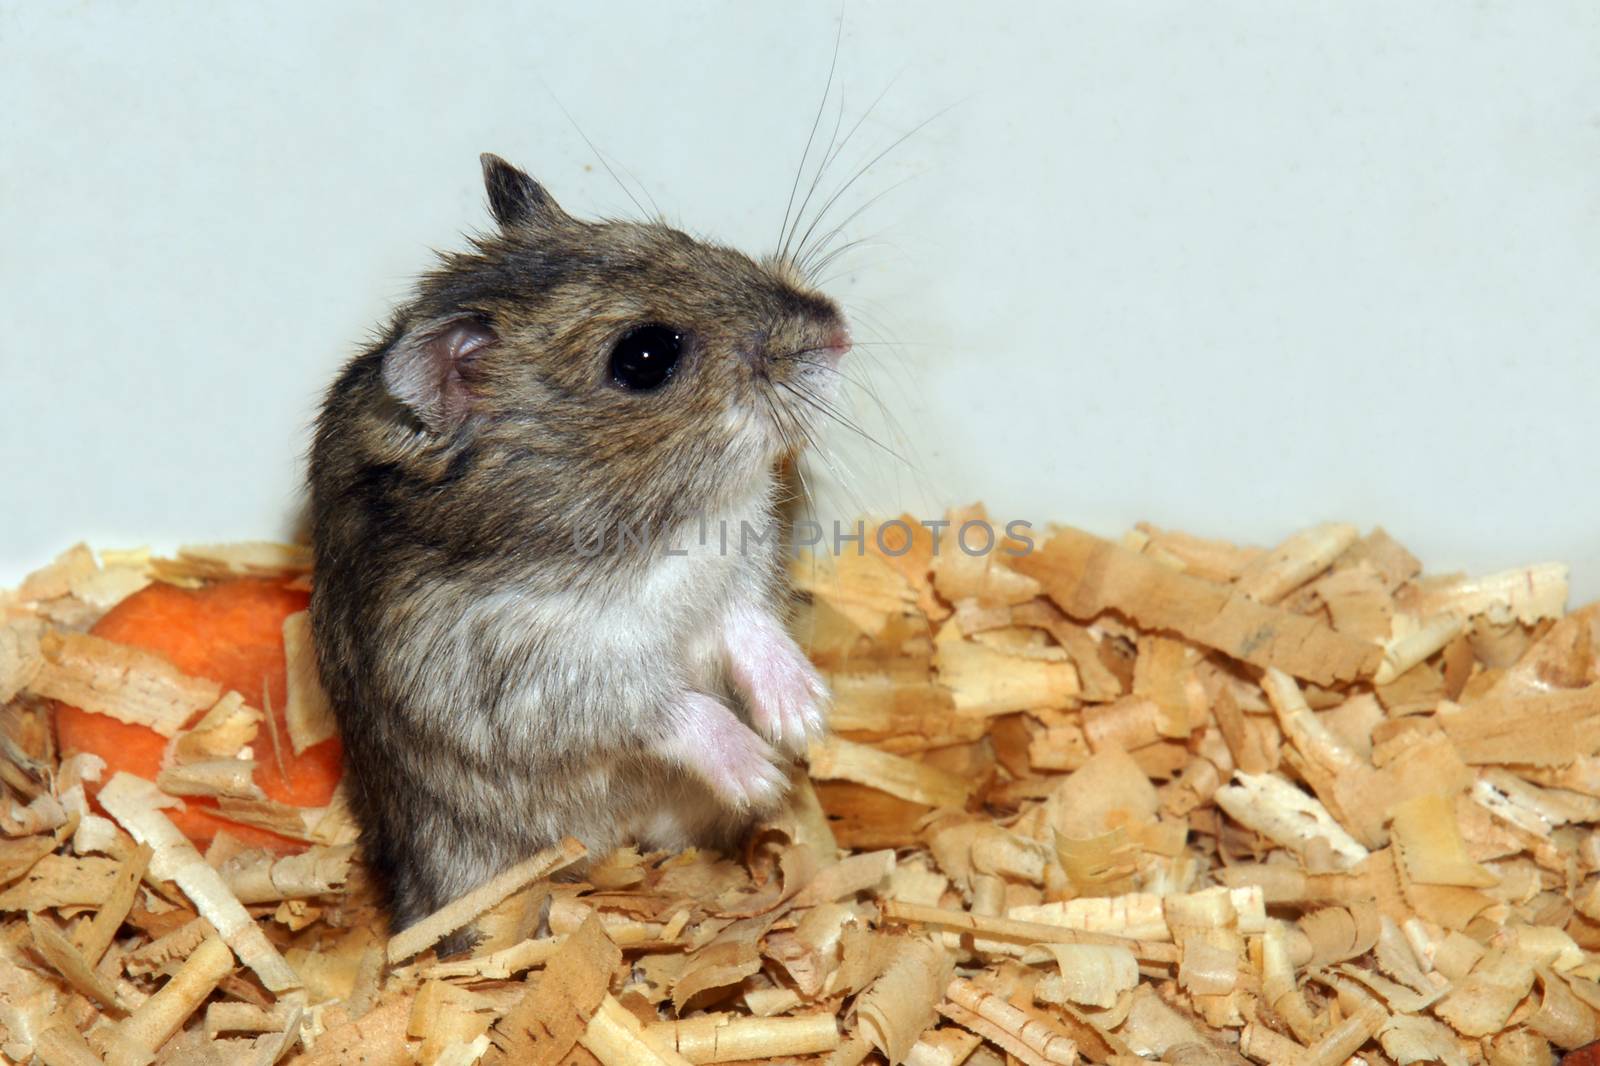 Cute hamster in sawdust wooden house by mranucha